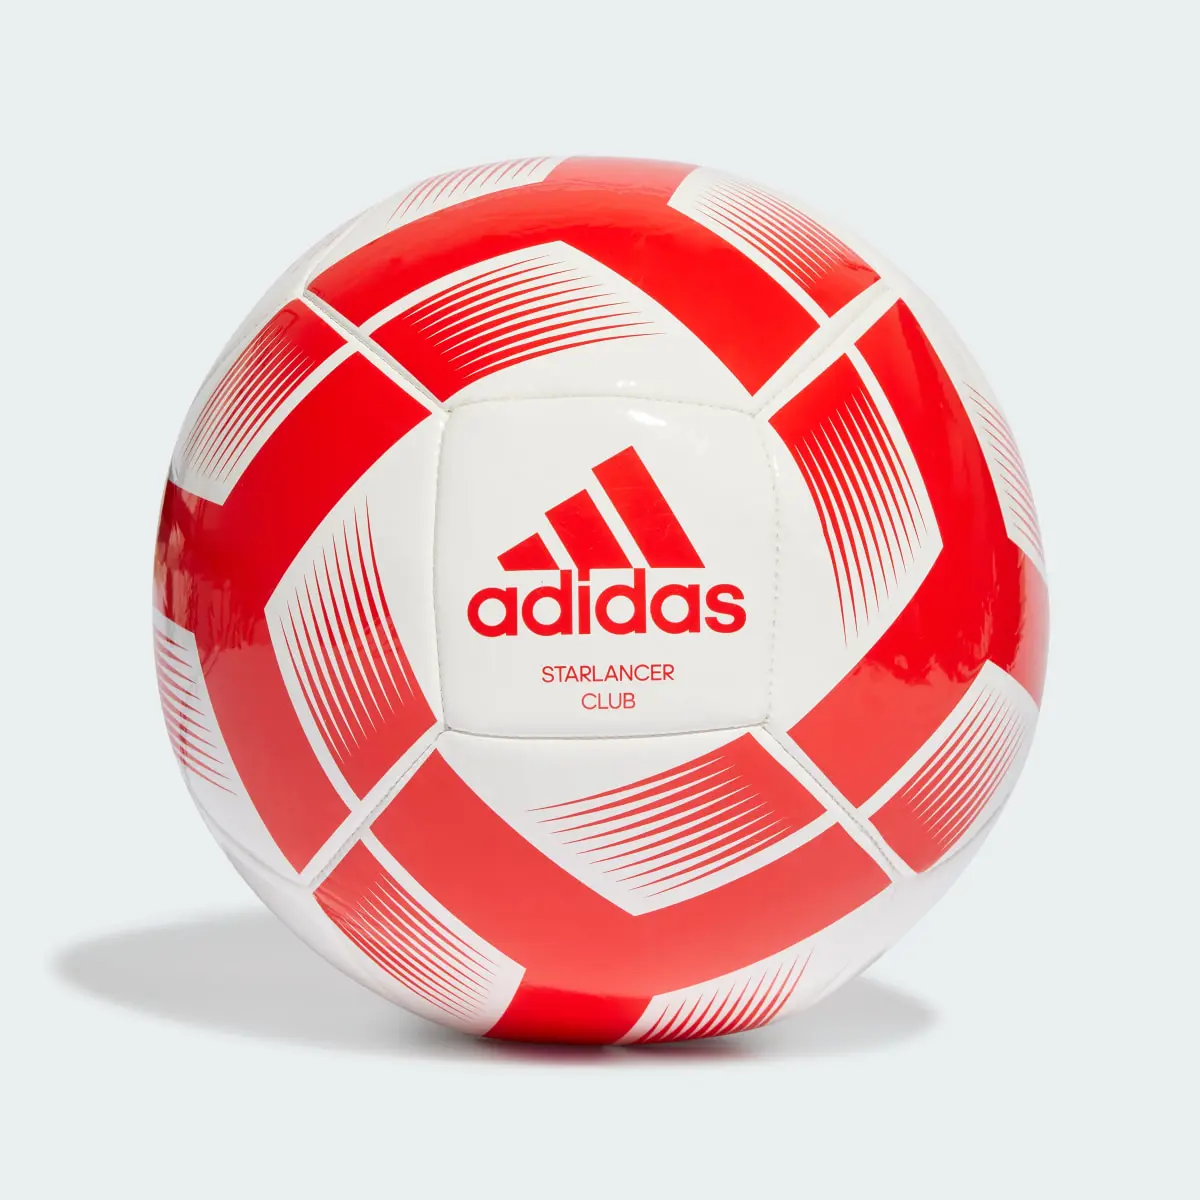 Adidas Starlancer Club Football. 2